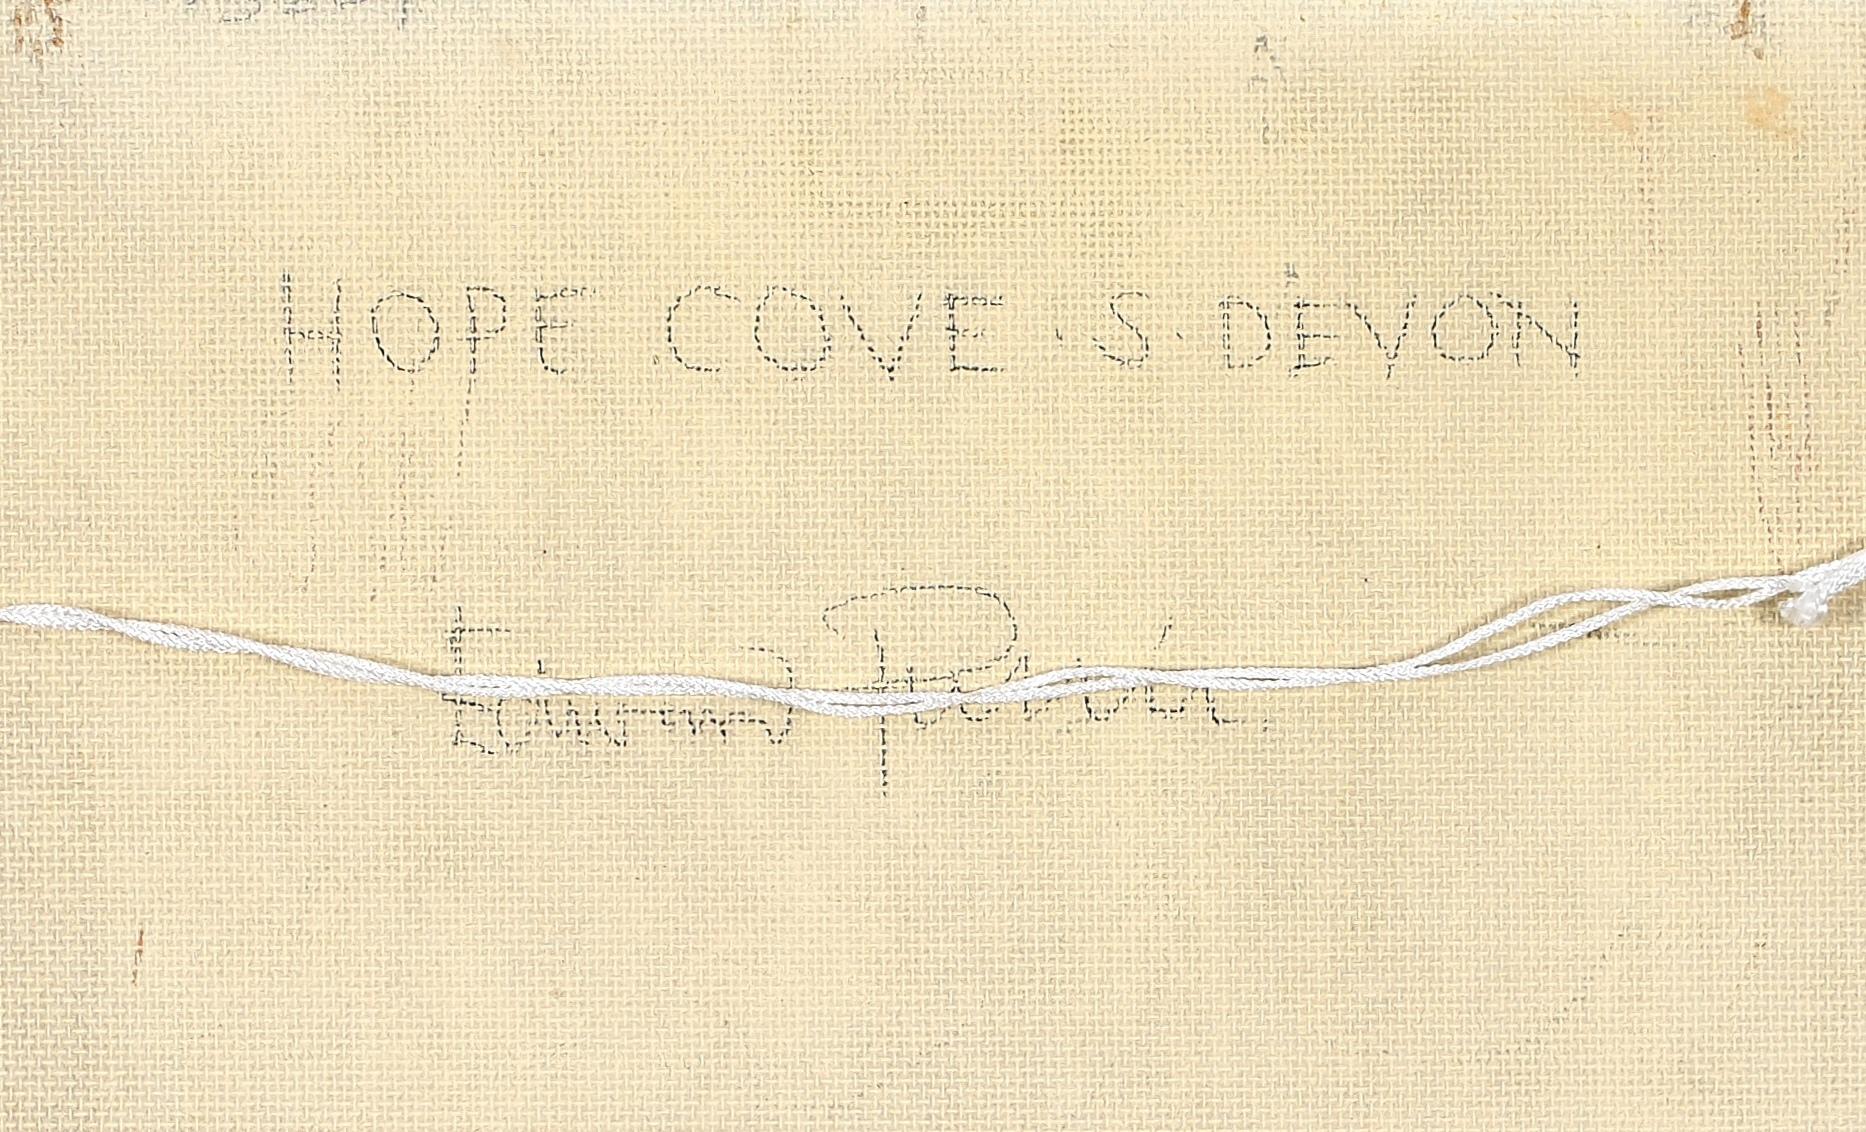 Hope Cove - Mid 20th Century Devon England Coastal Landscape Oil Painting For Sale 7